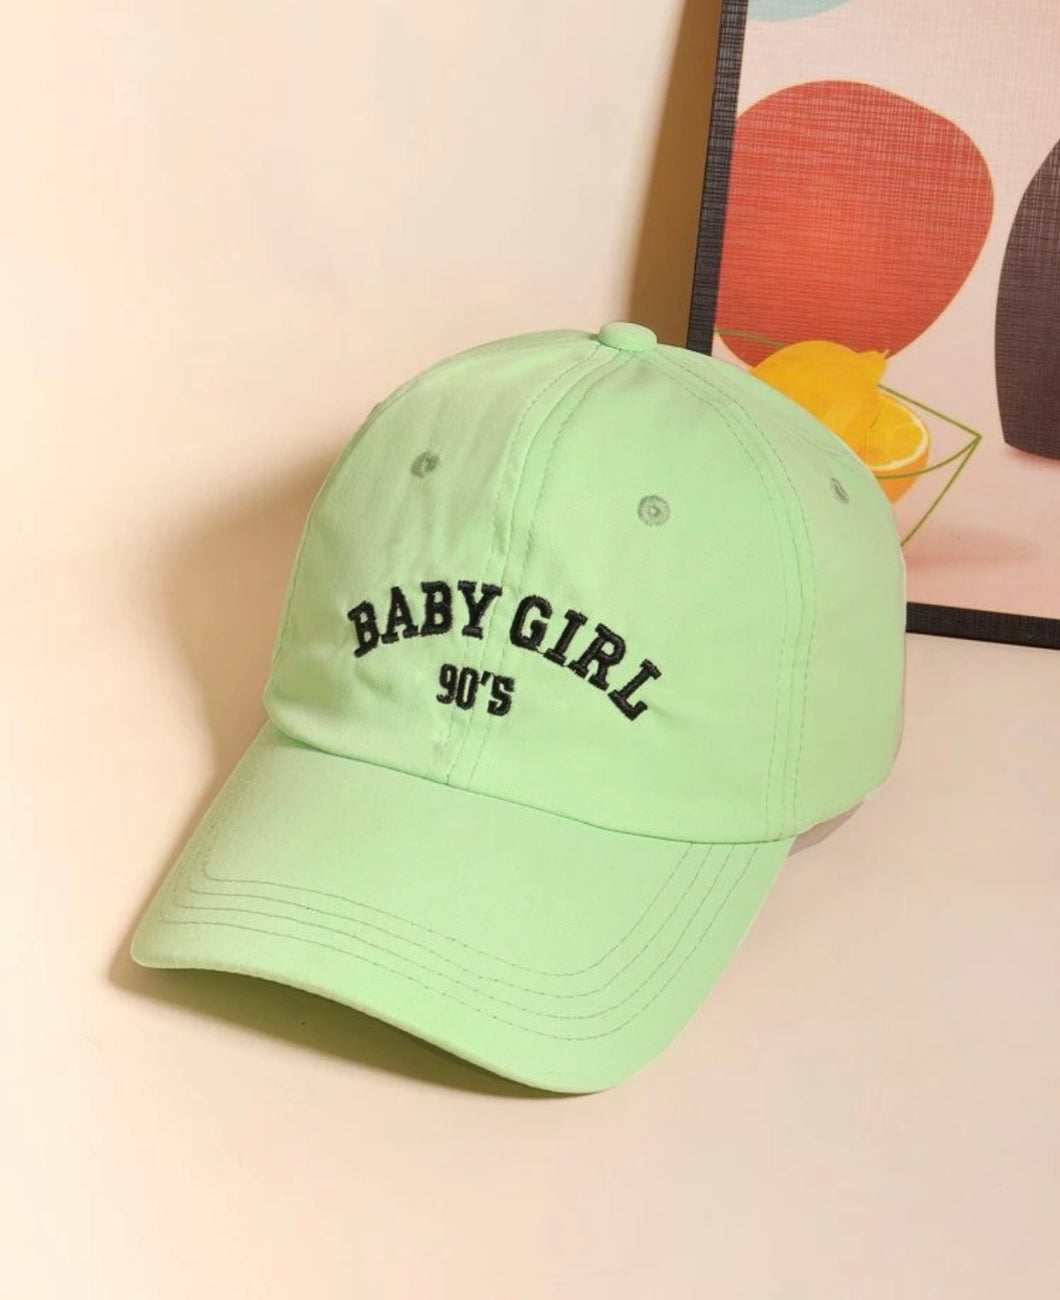 90’s baby girl like green Cap